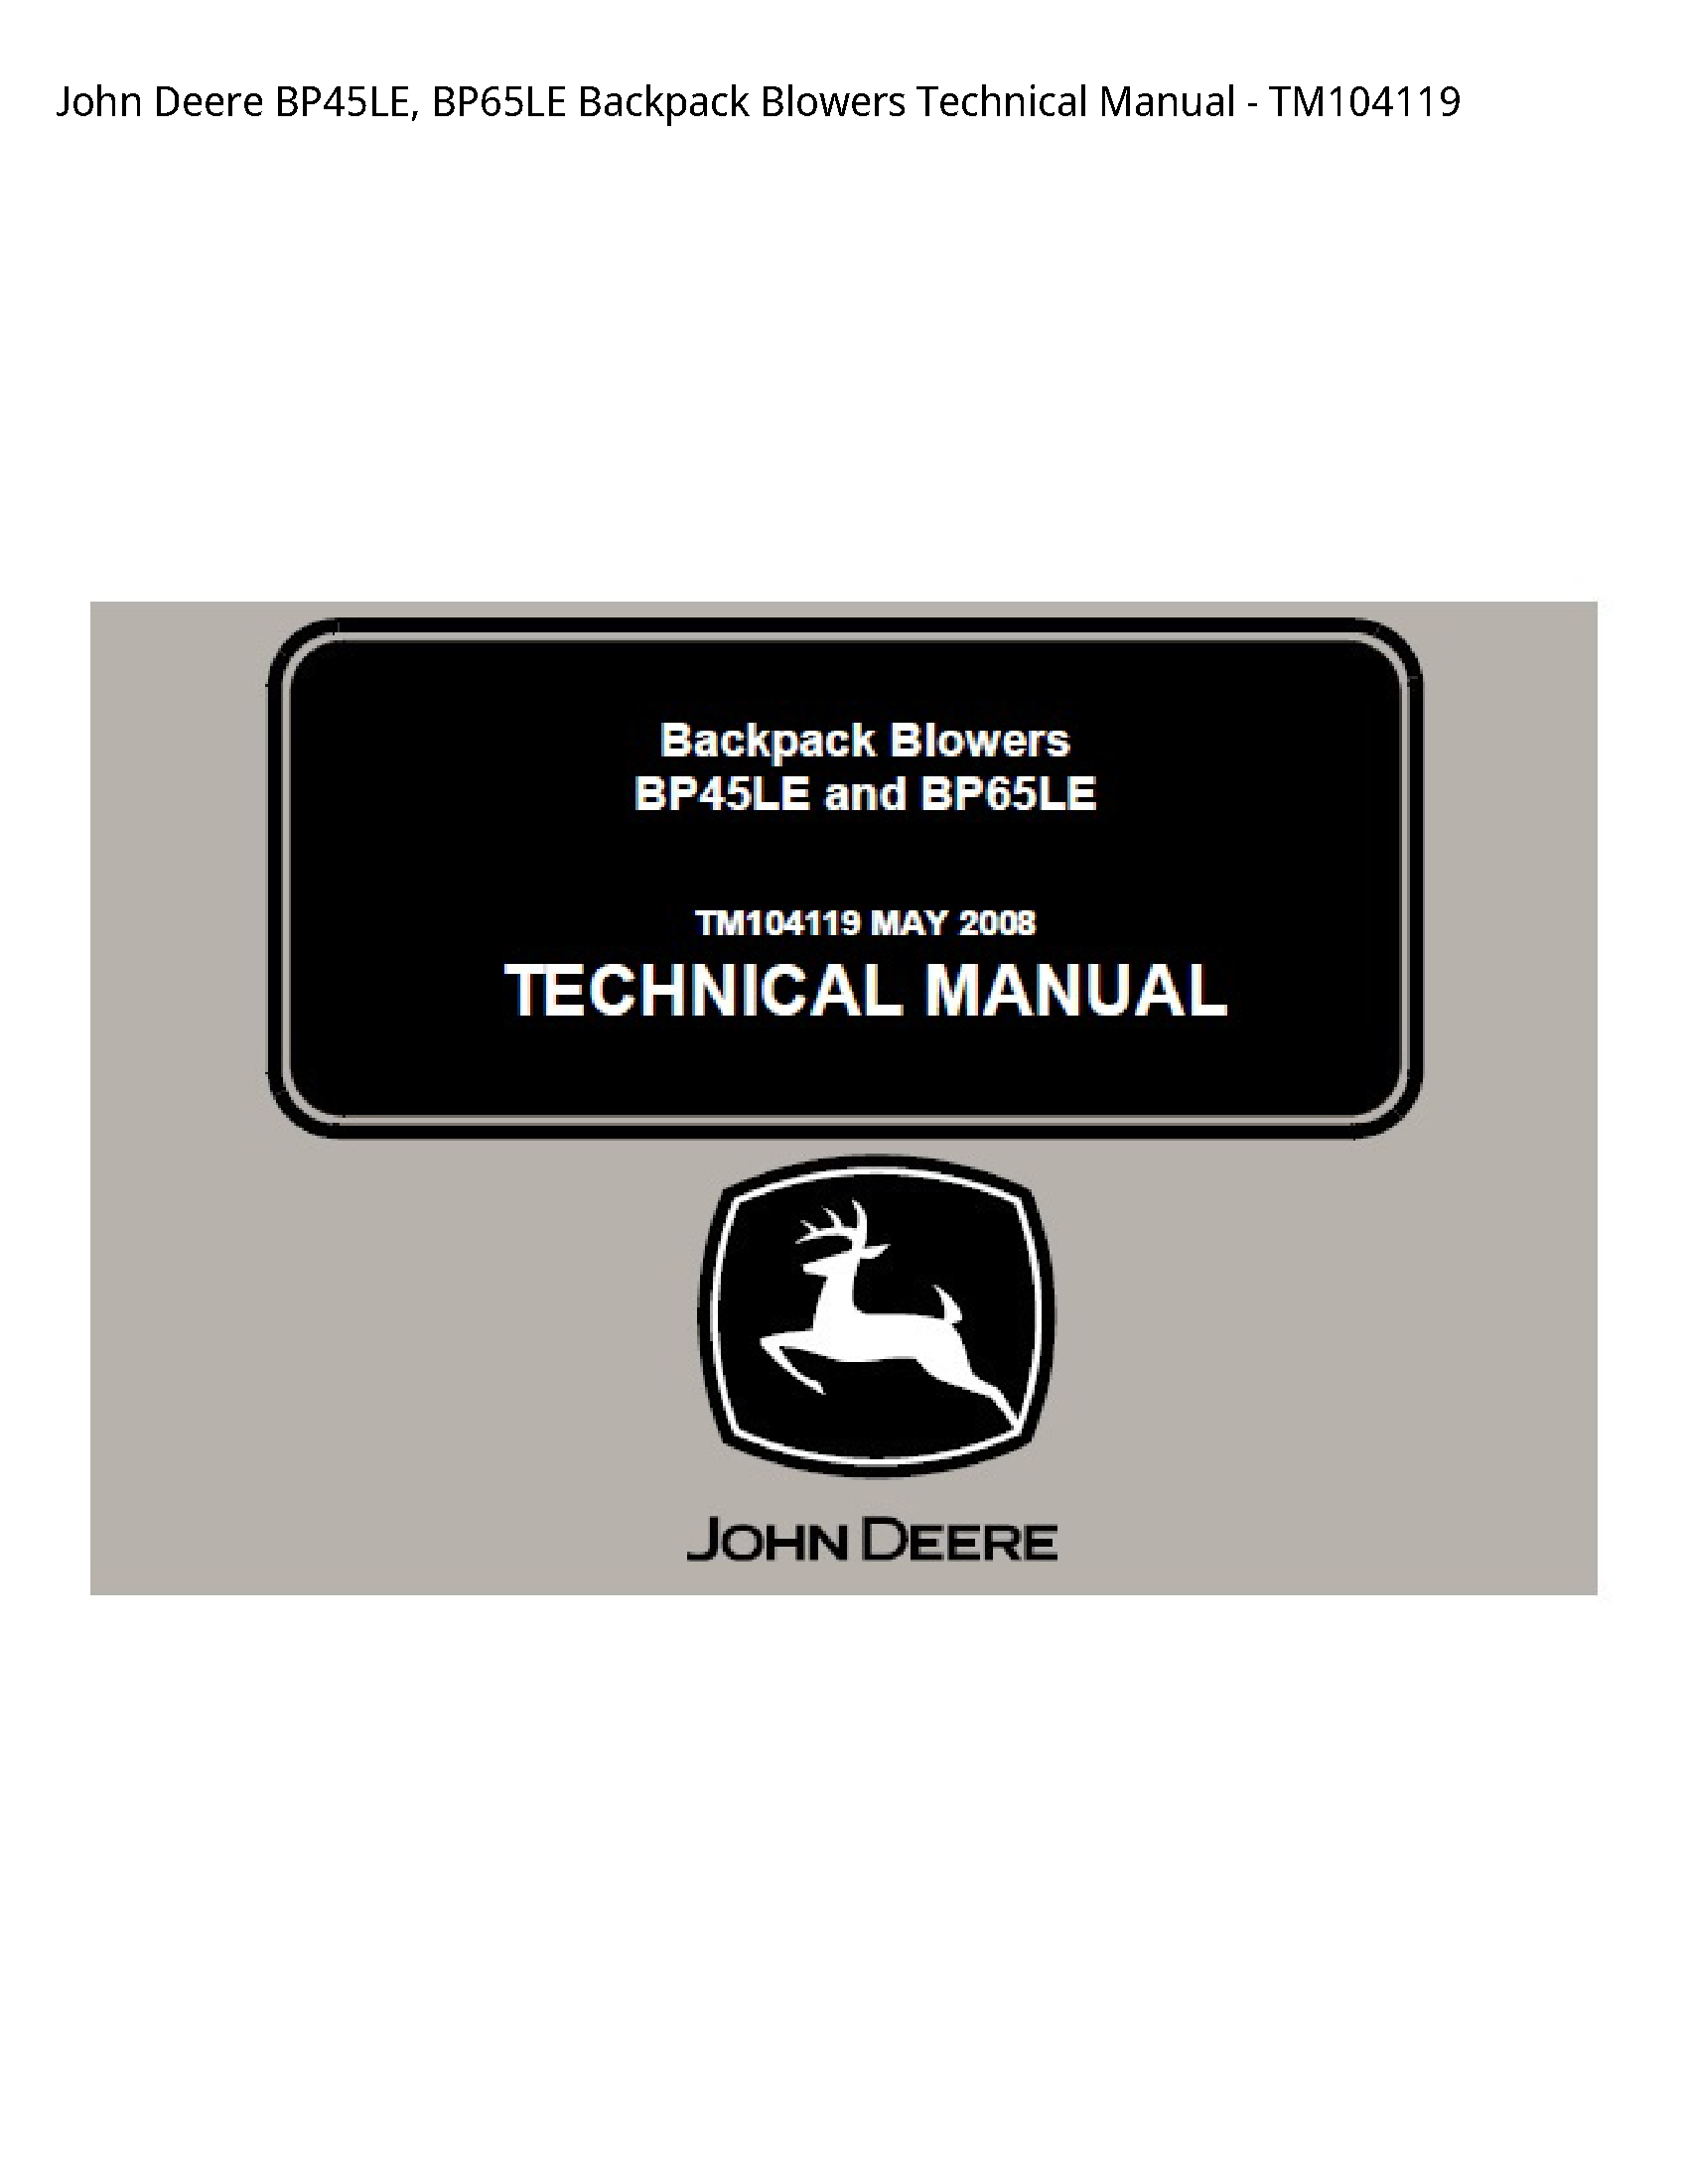 John Deere BP45LE Backpack Blowers Technical manual